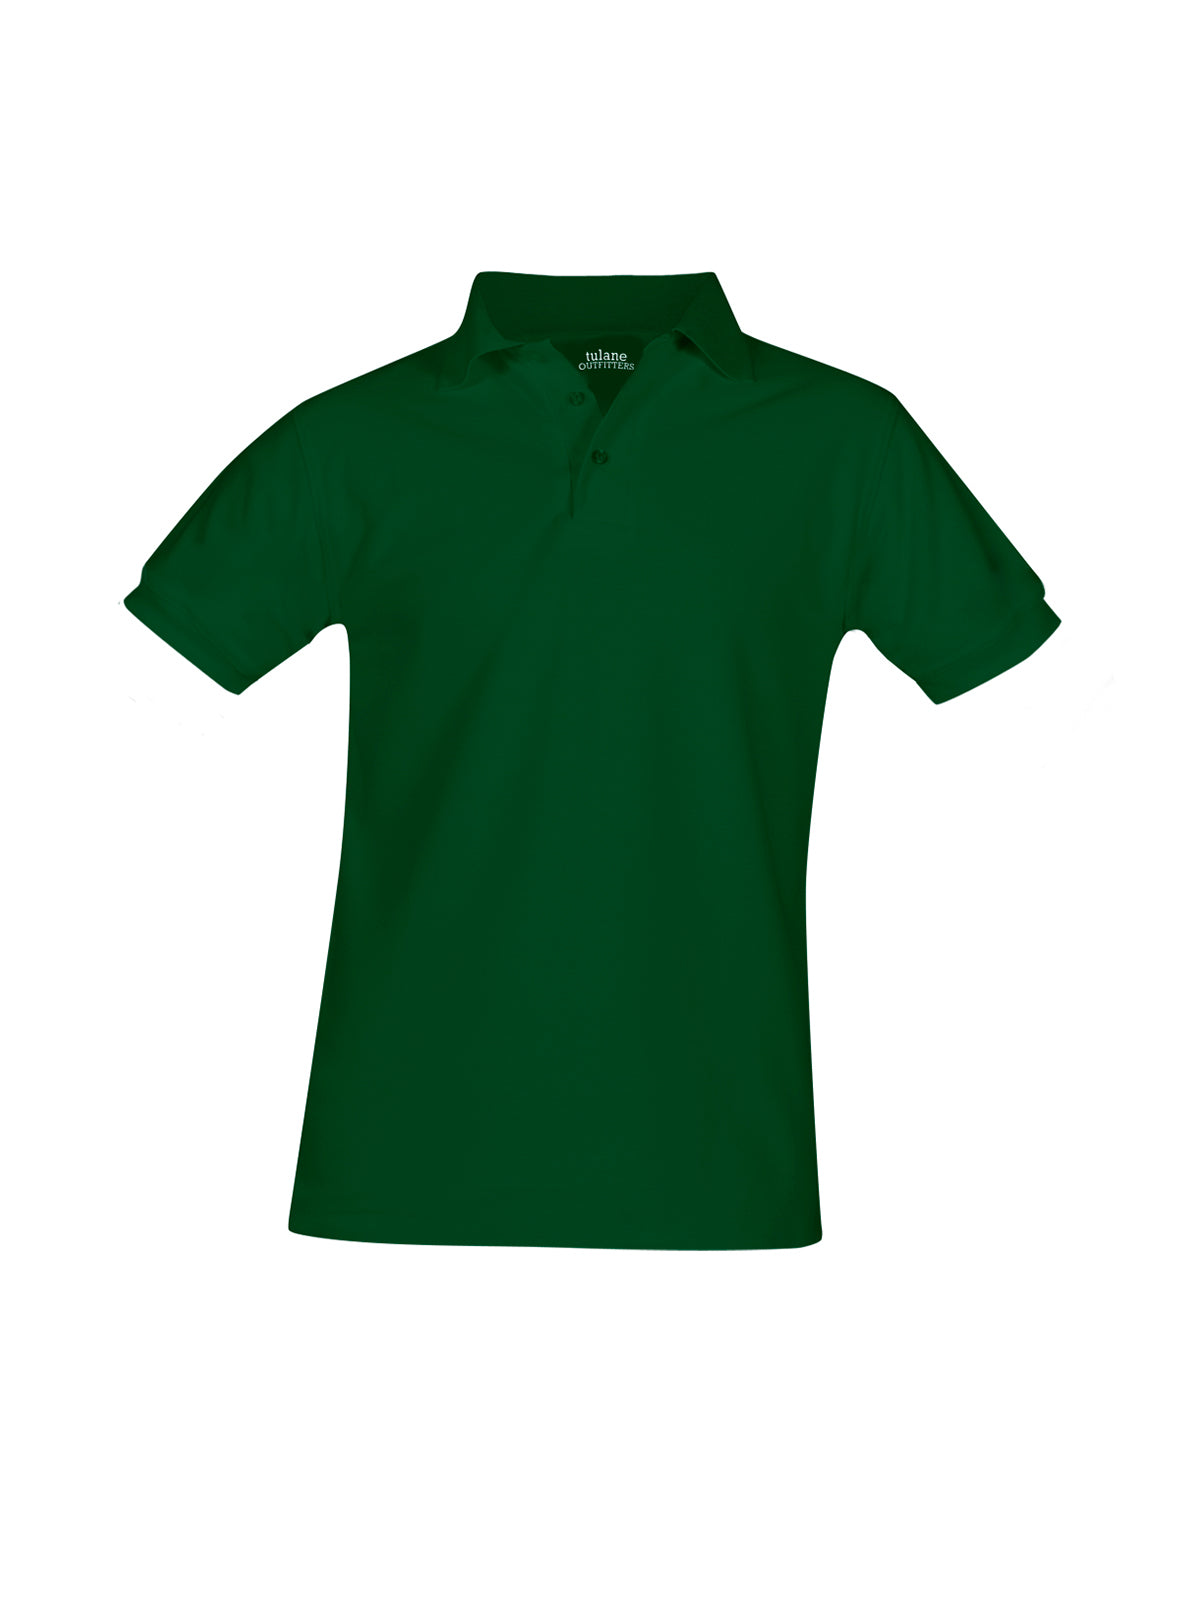 Unisex Short Sleeve Polo - 8747 - Green